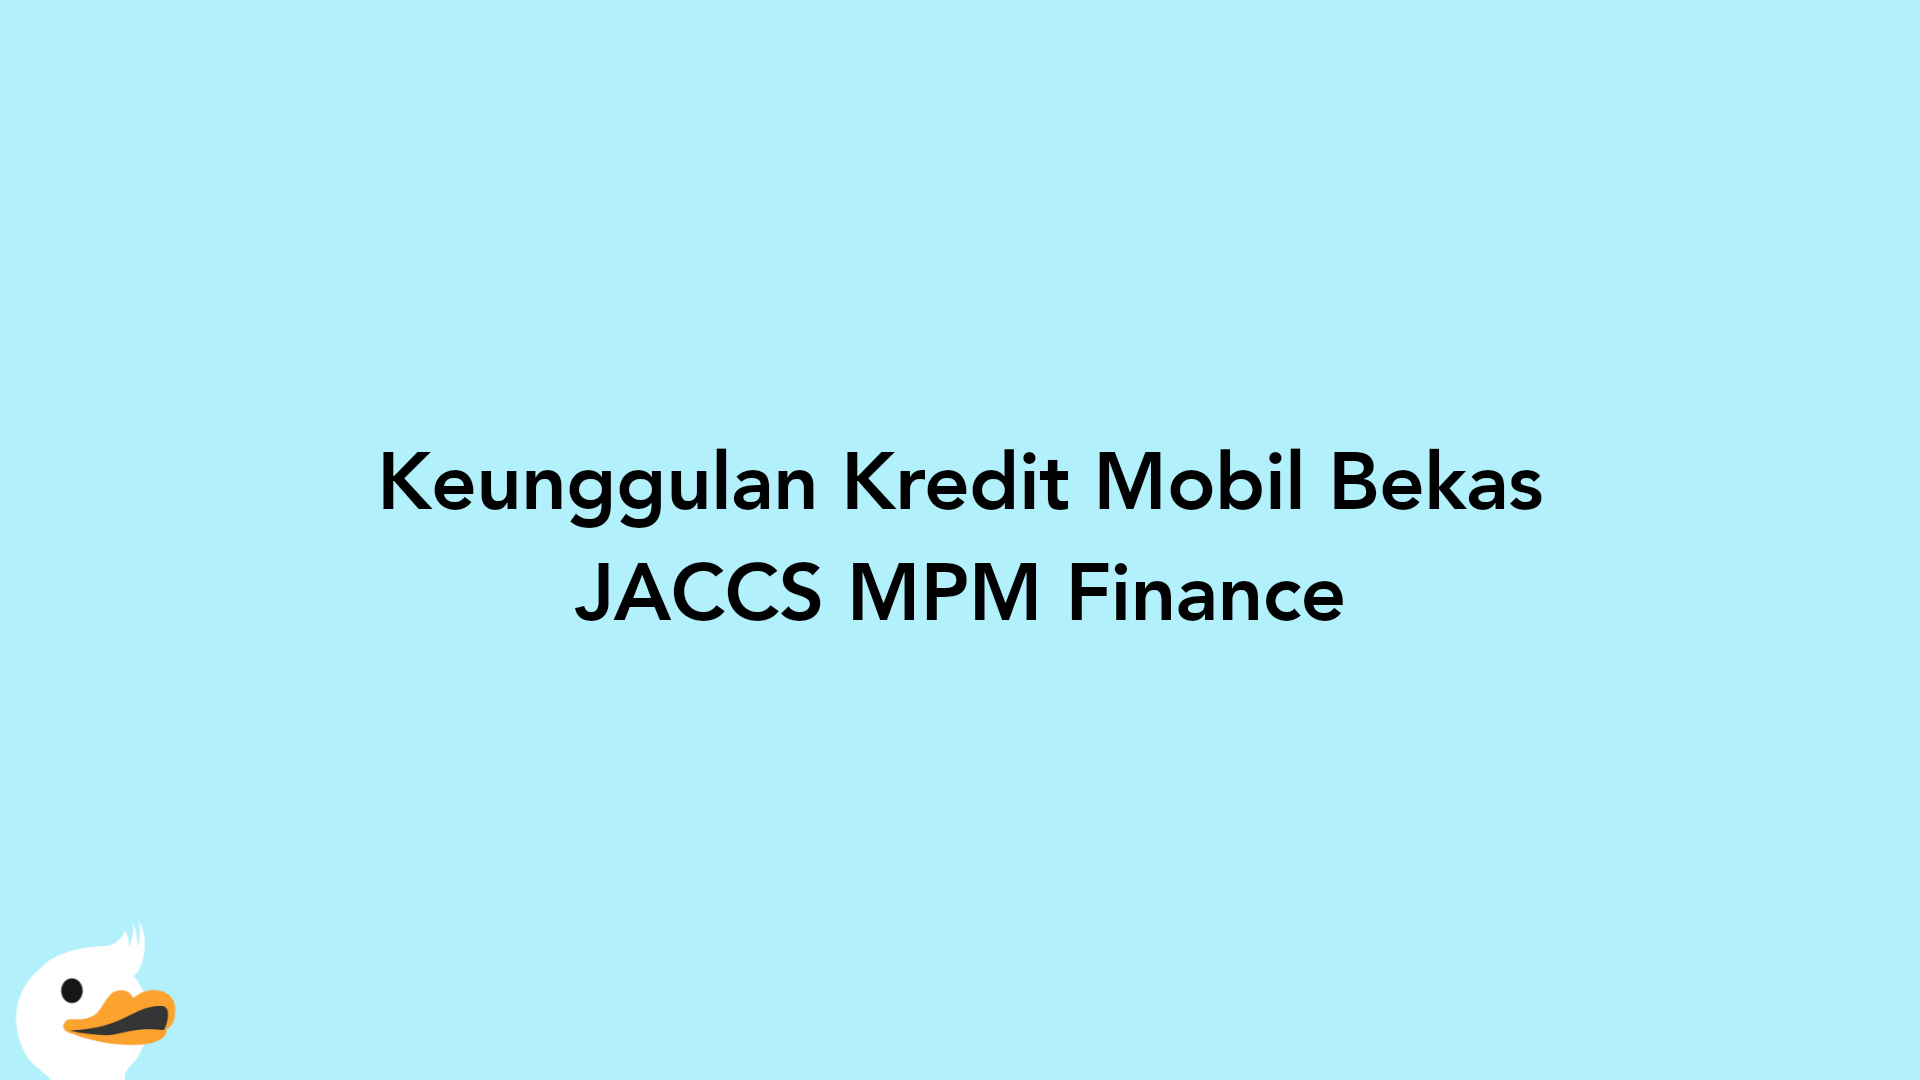 Keunggulan Kredit Mobil Bekas JACCS MPM Finance